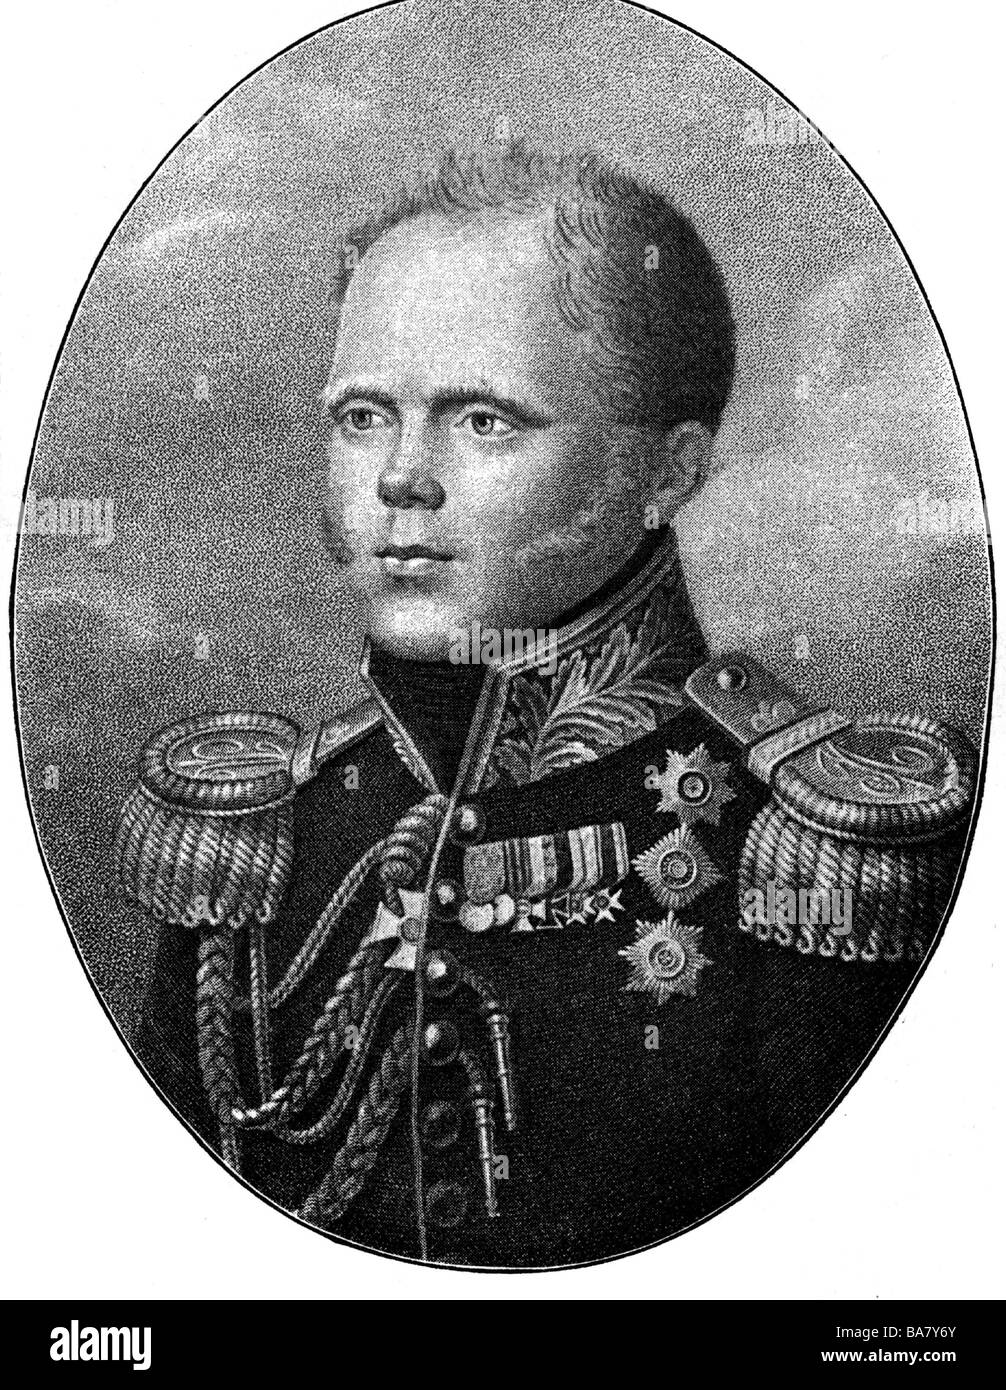 Constantine Pavlovich, 8.5.1779 - 27.6.1831, Grand Duke of Russia, portrait, engraving by H. Benenr, 19th century, , Stock Photo